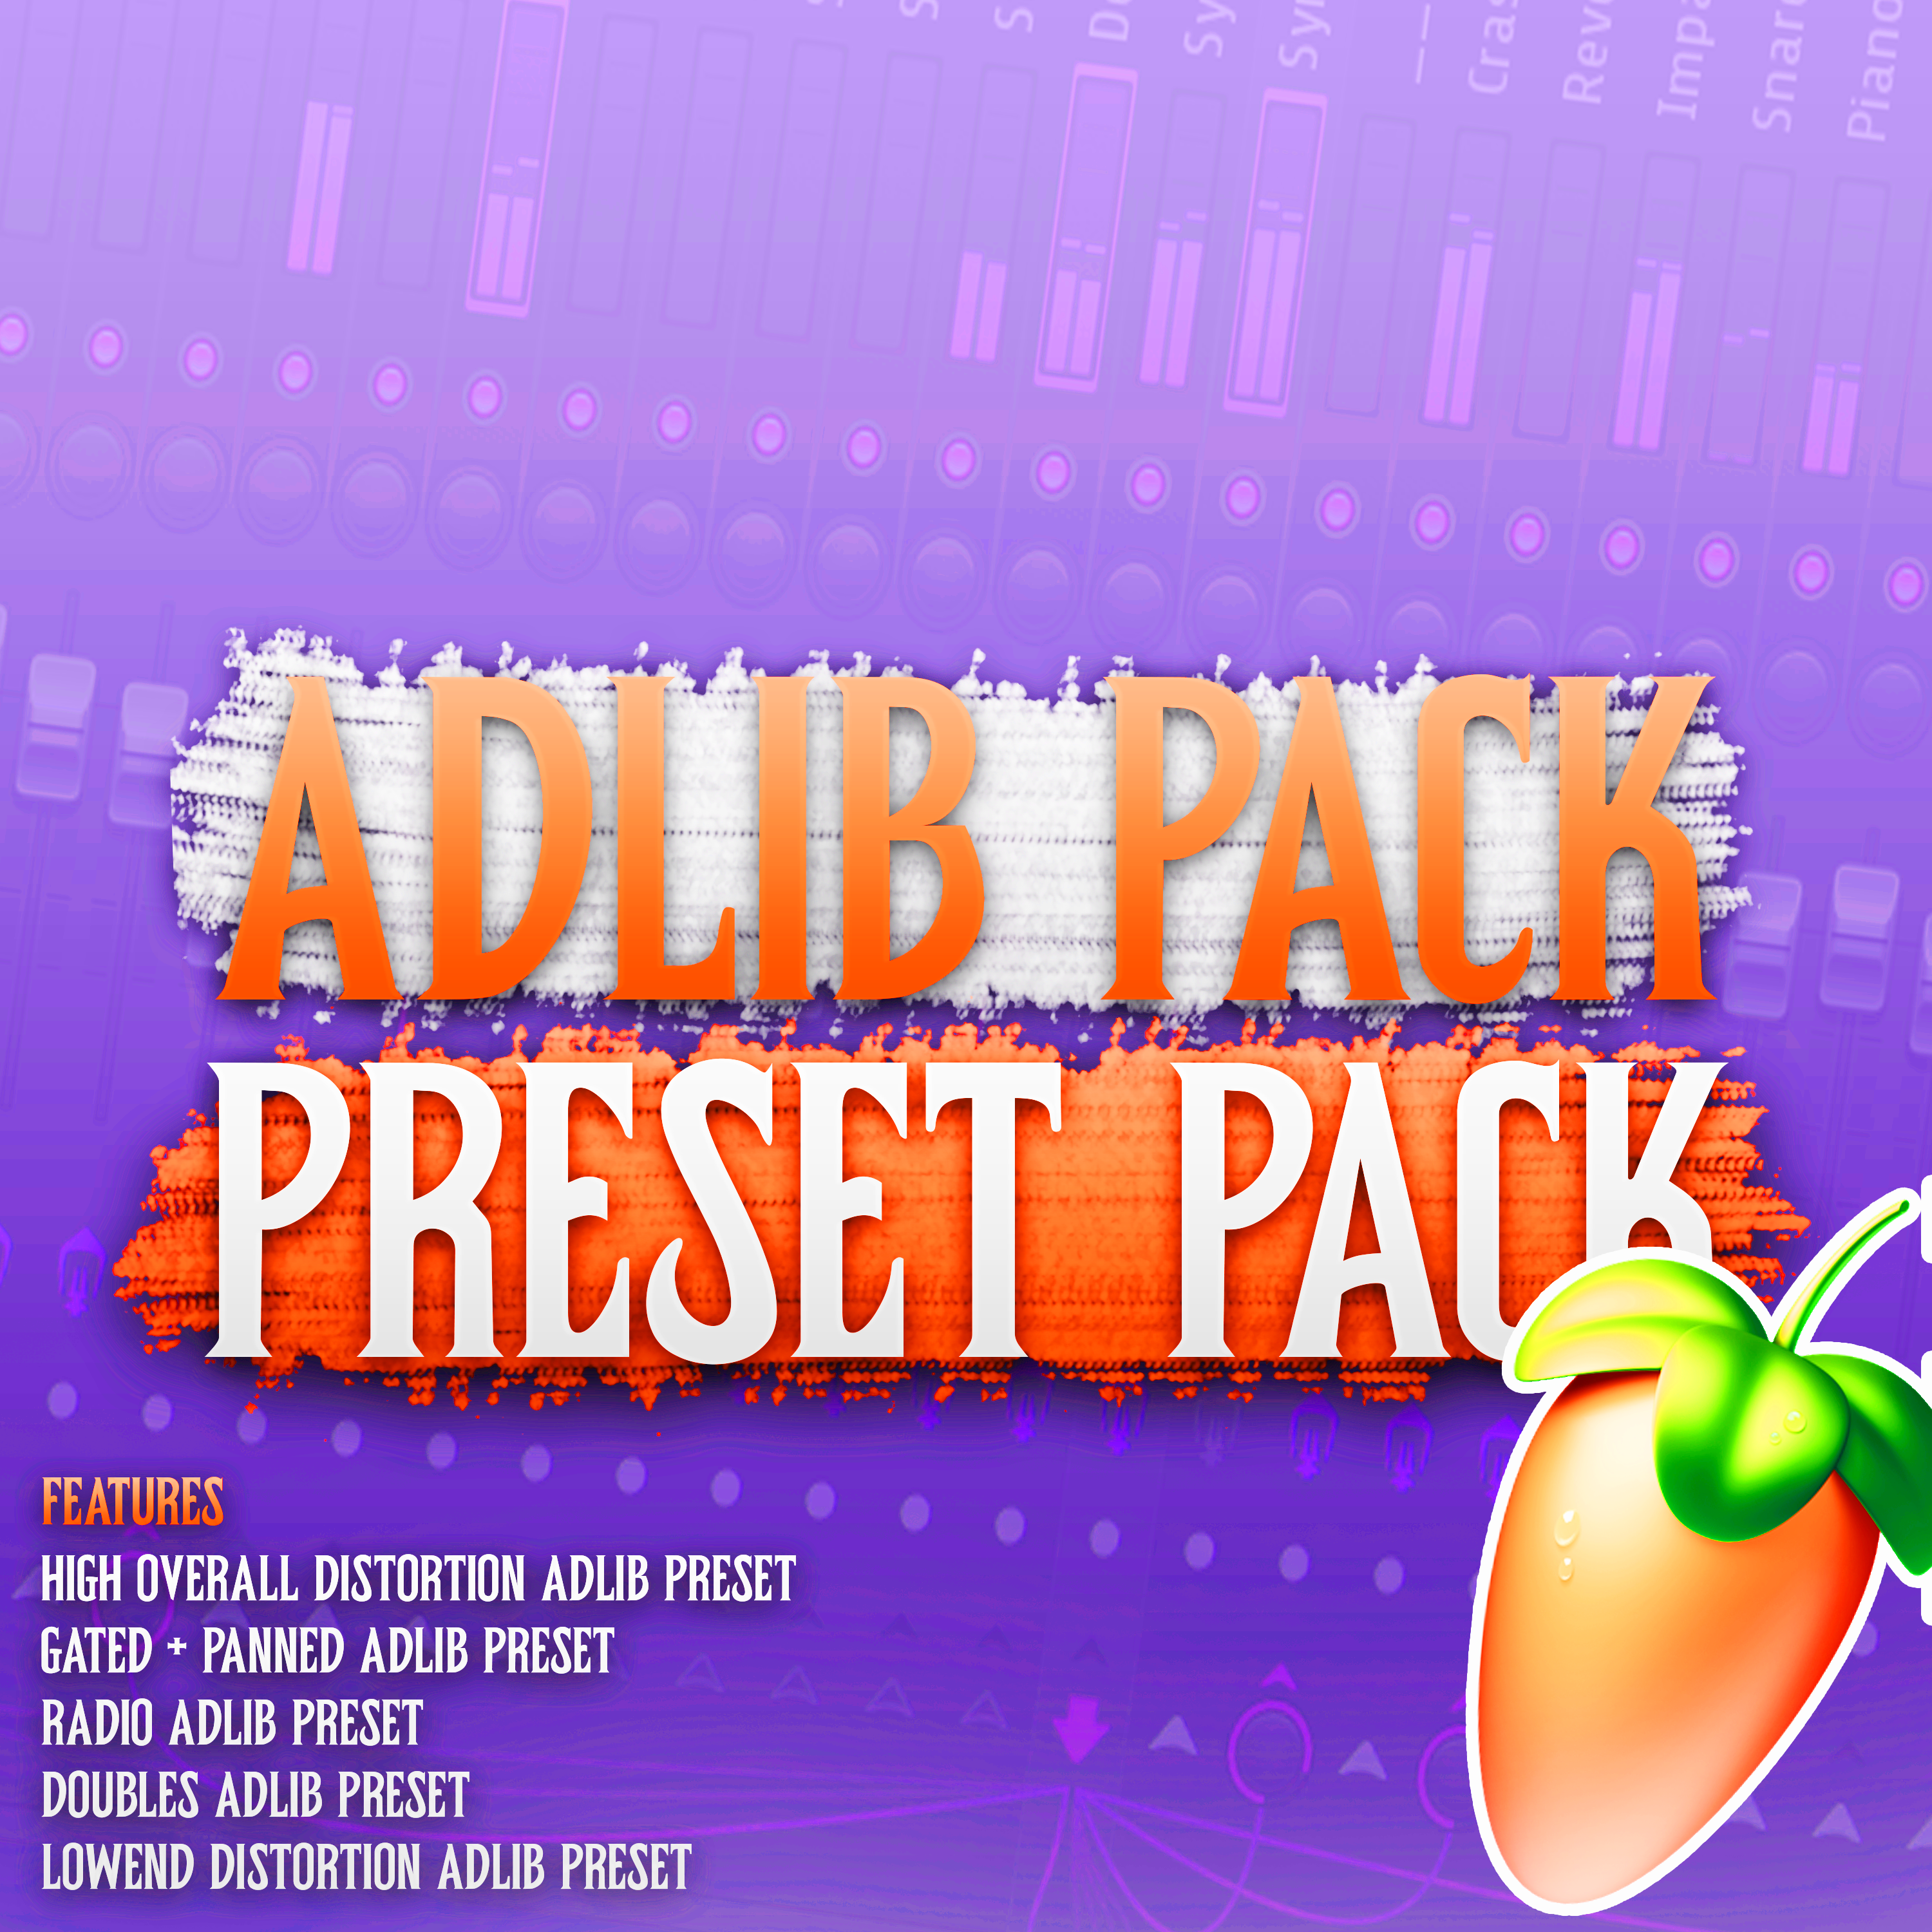 The Adlib Preset Pack